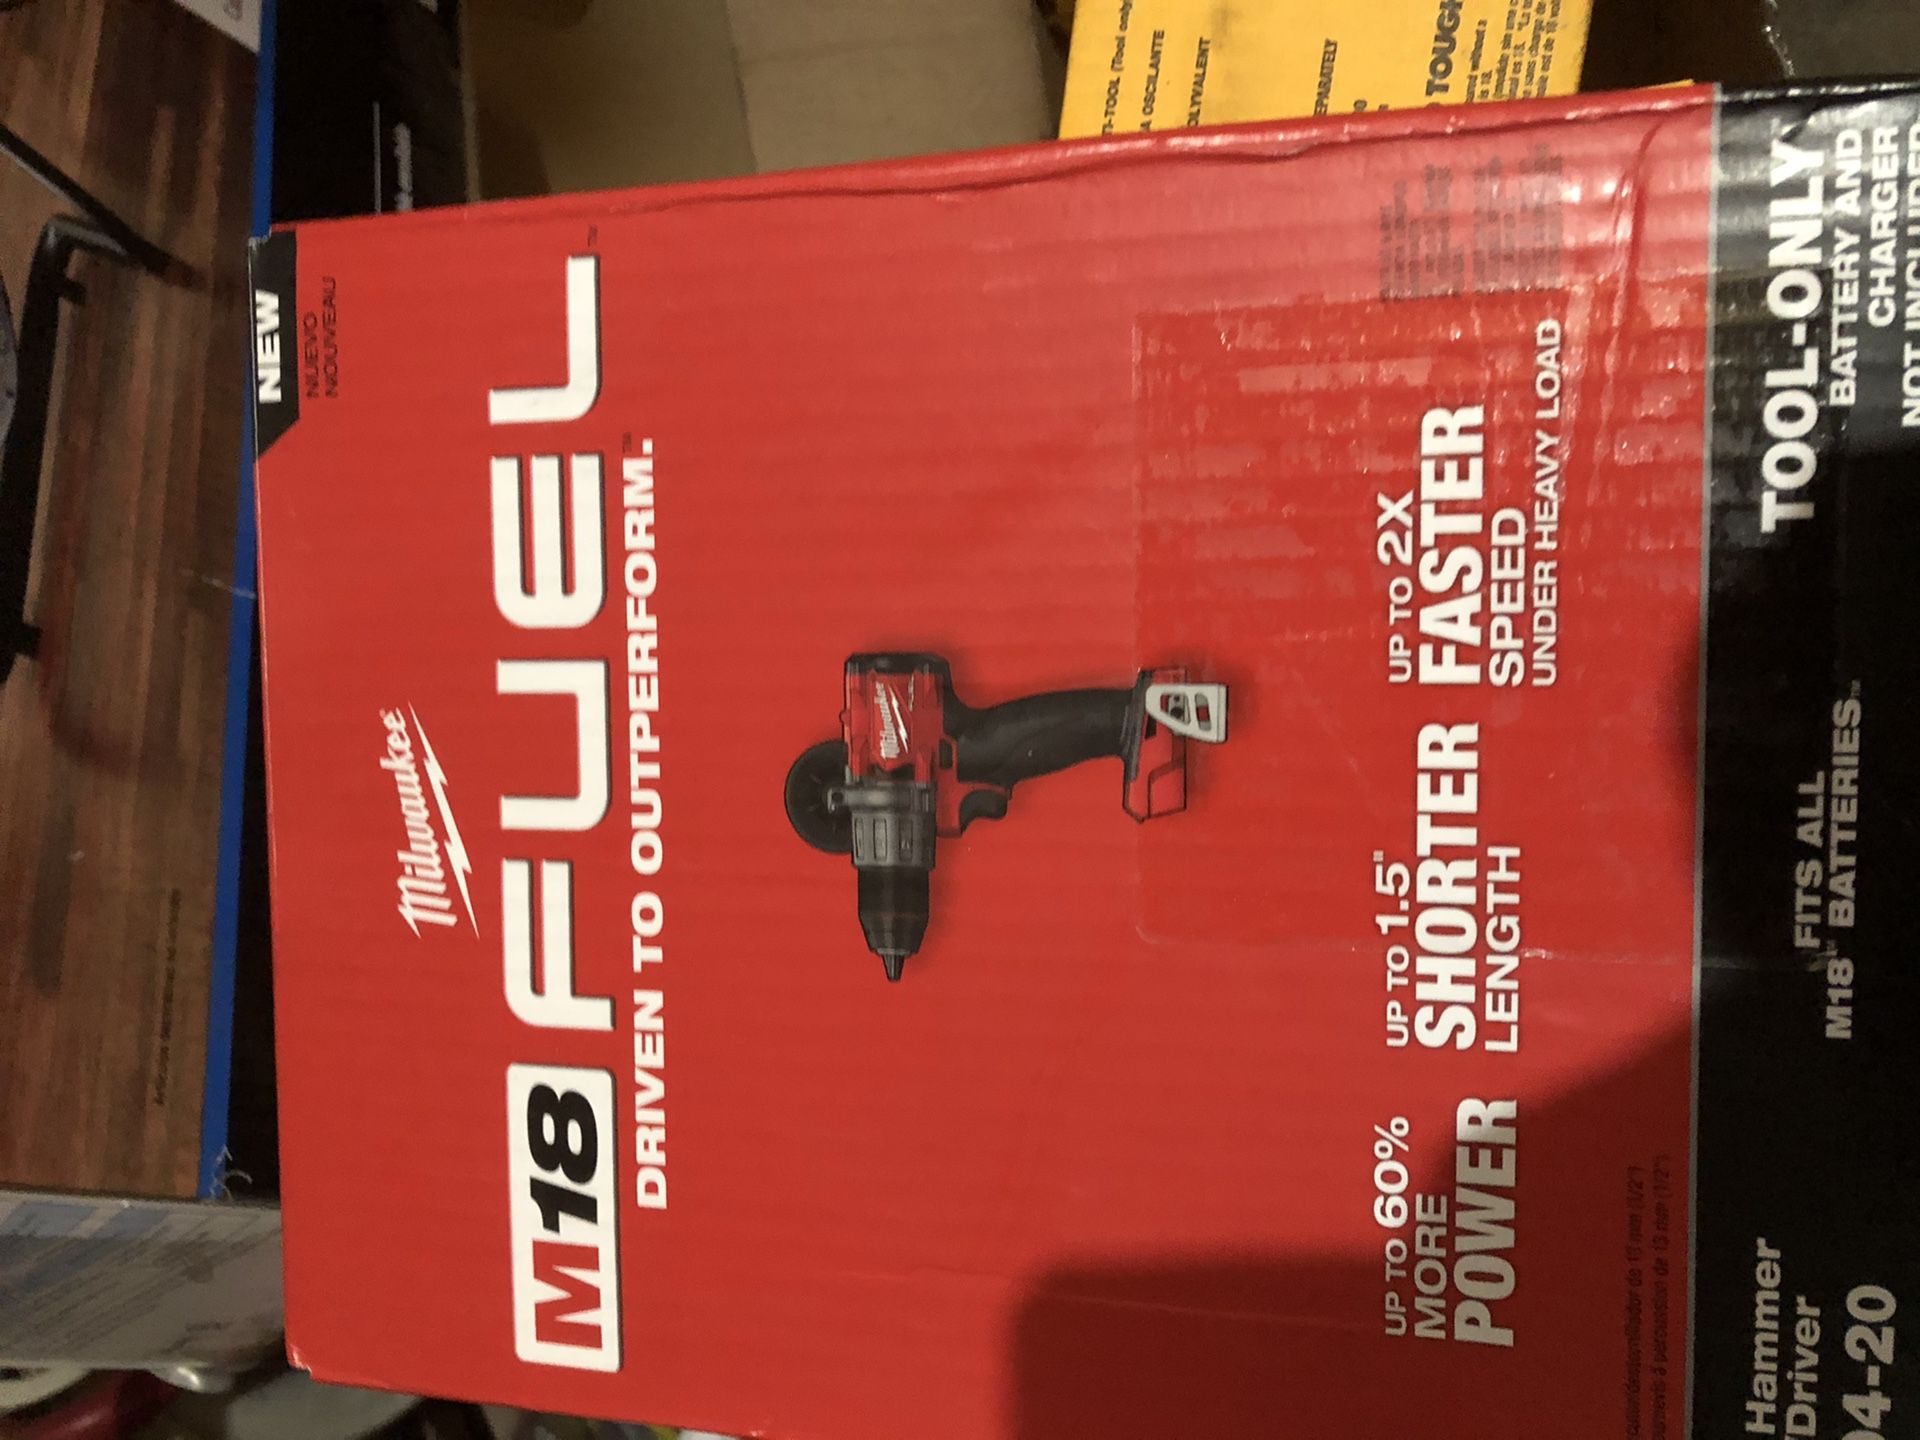 Milwaukee fuel hammer drill asking $90